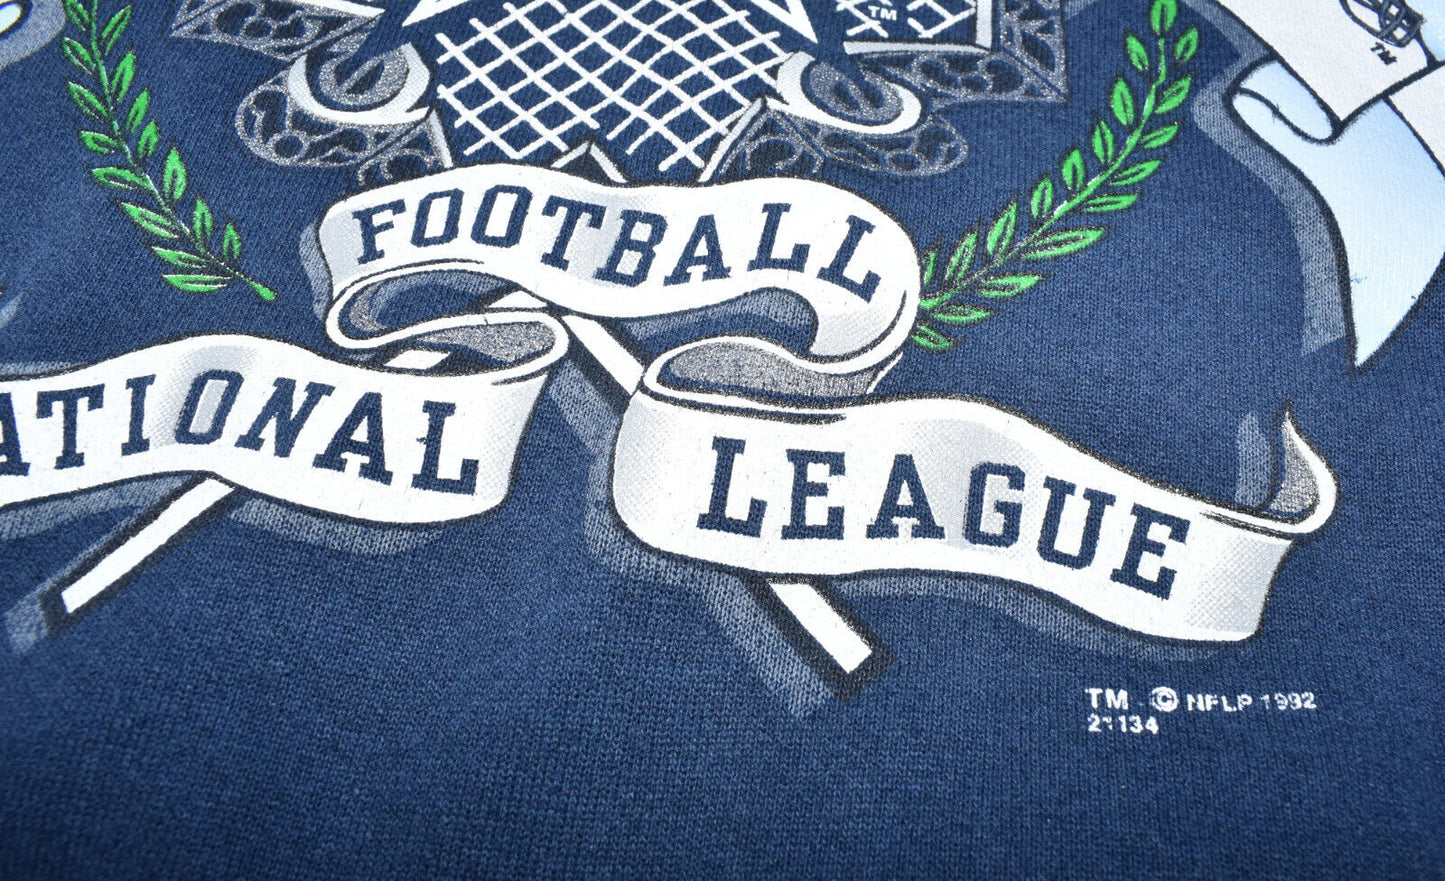 Vintage 1992 Dallas Cowboys National Football League Sweatshirt Blue Small or Medium